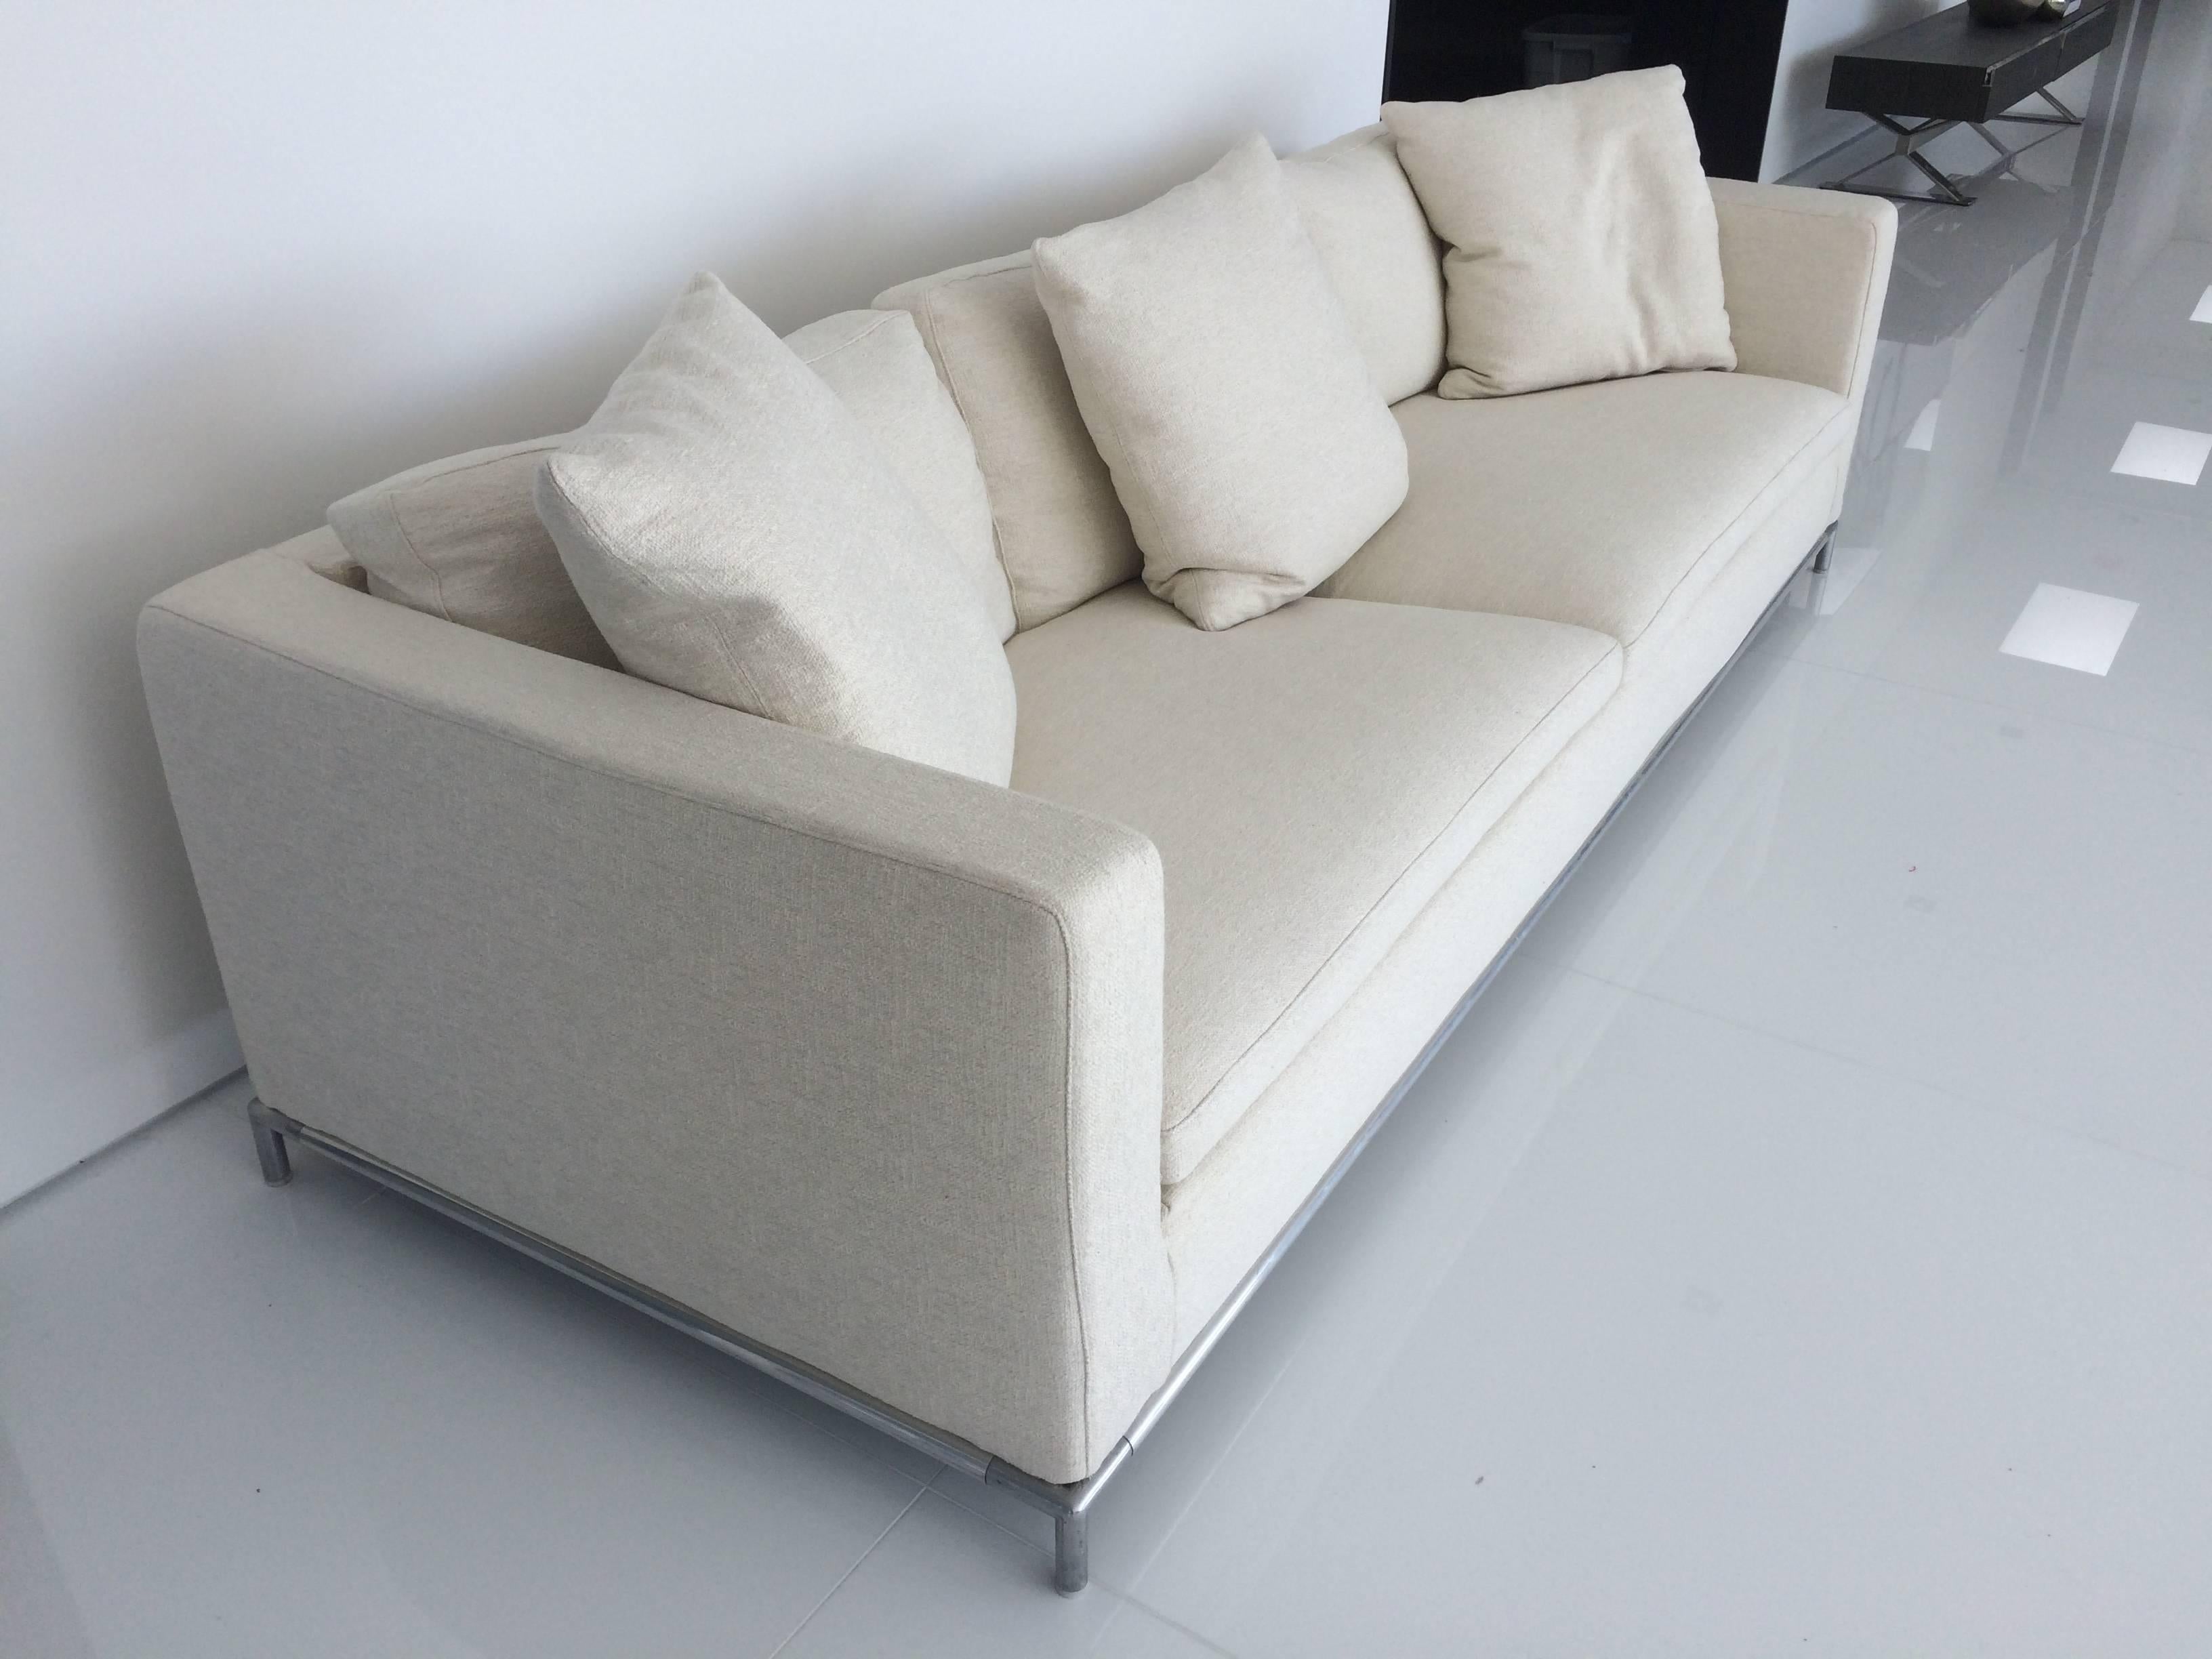 b&b italia george sofa price